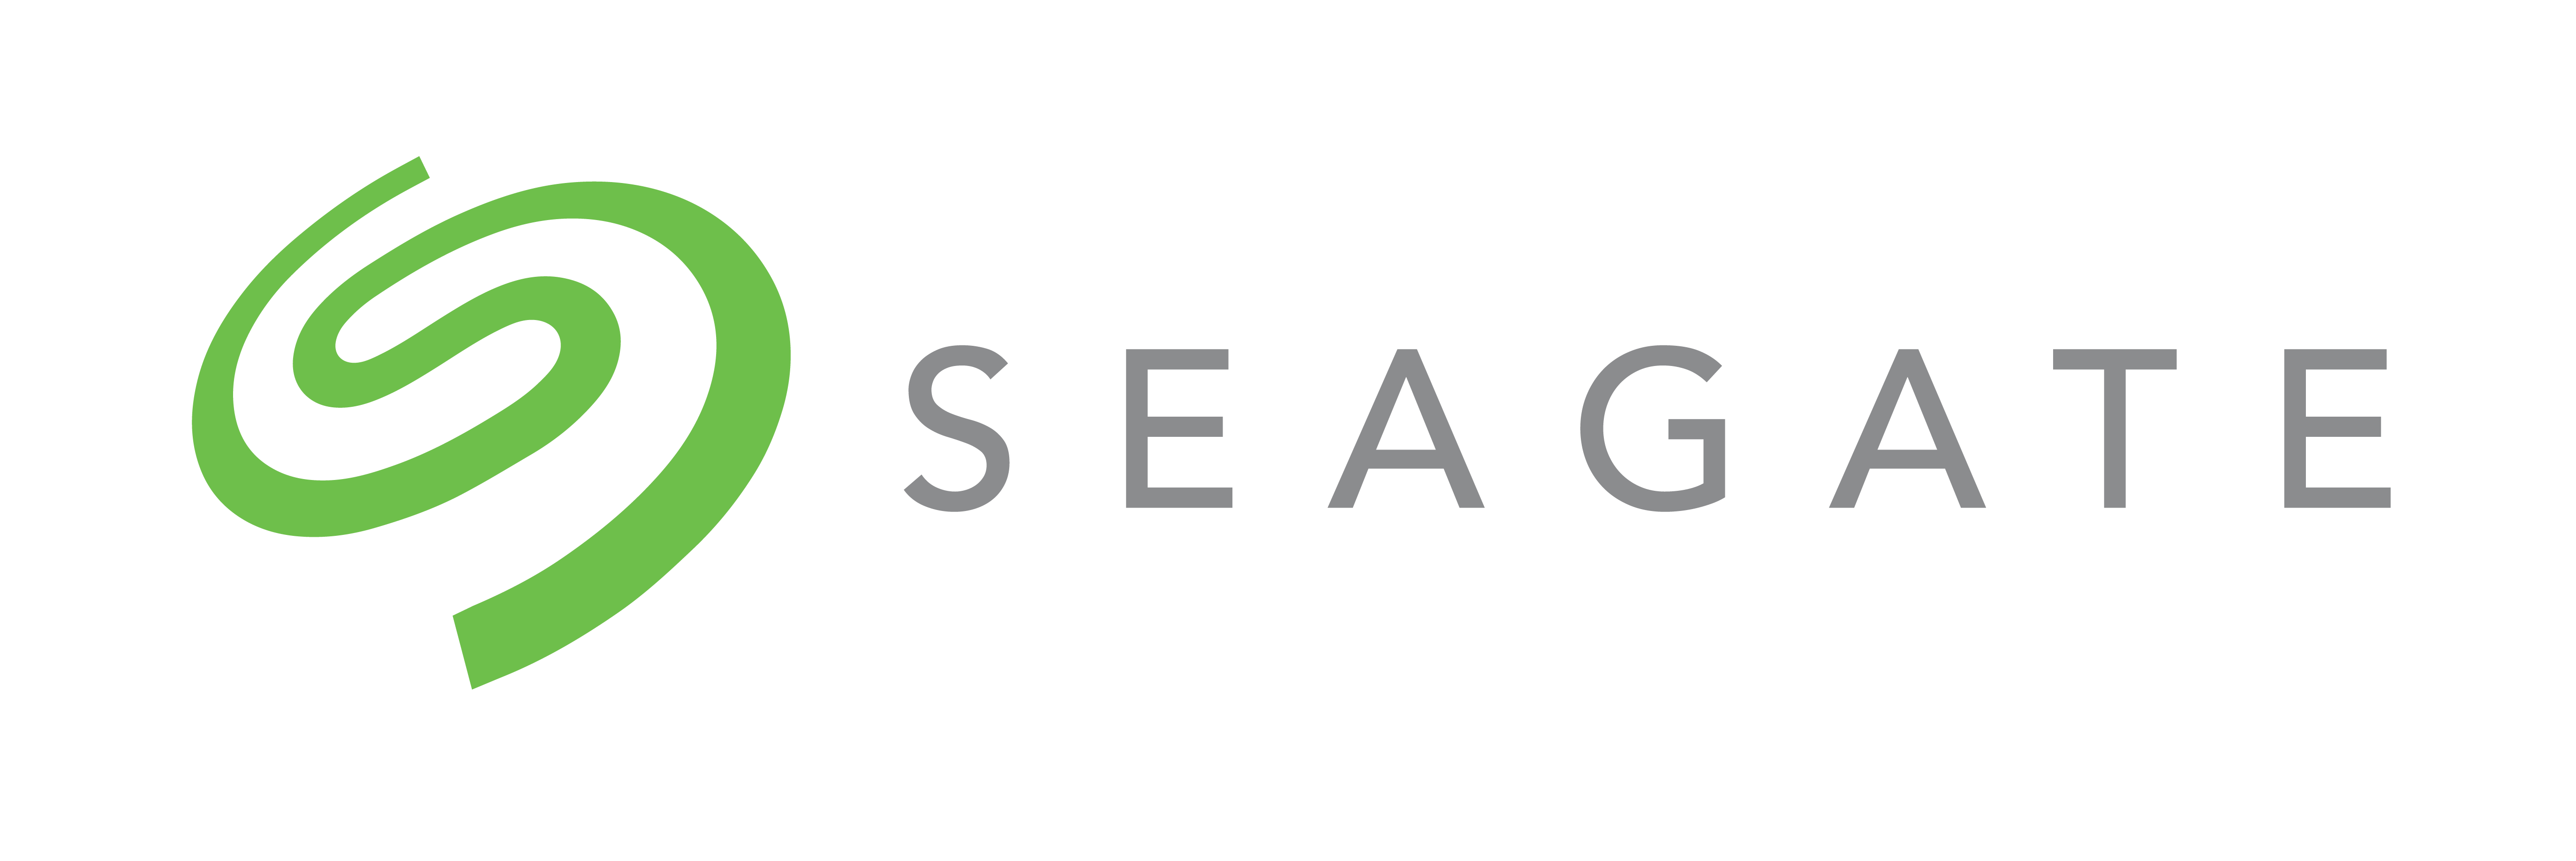 File:Seagate2015 2c horizonta